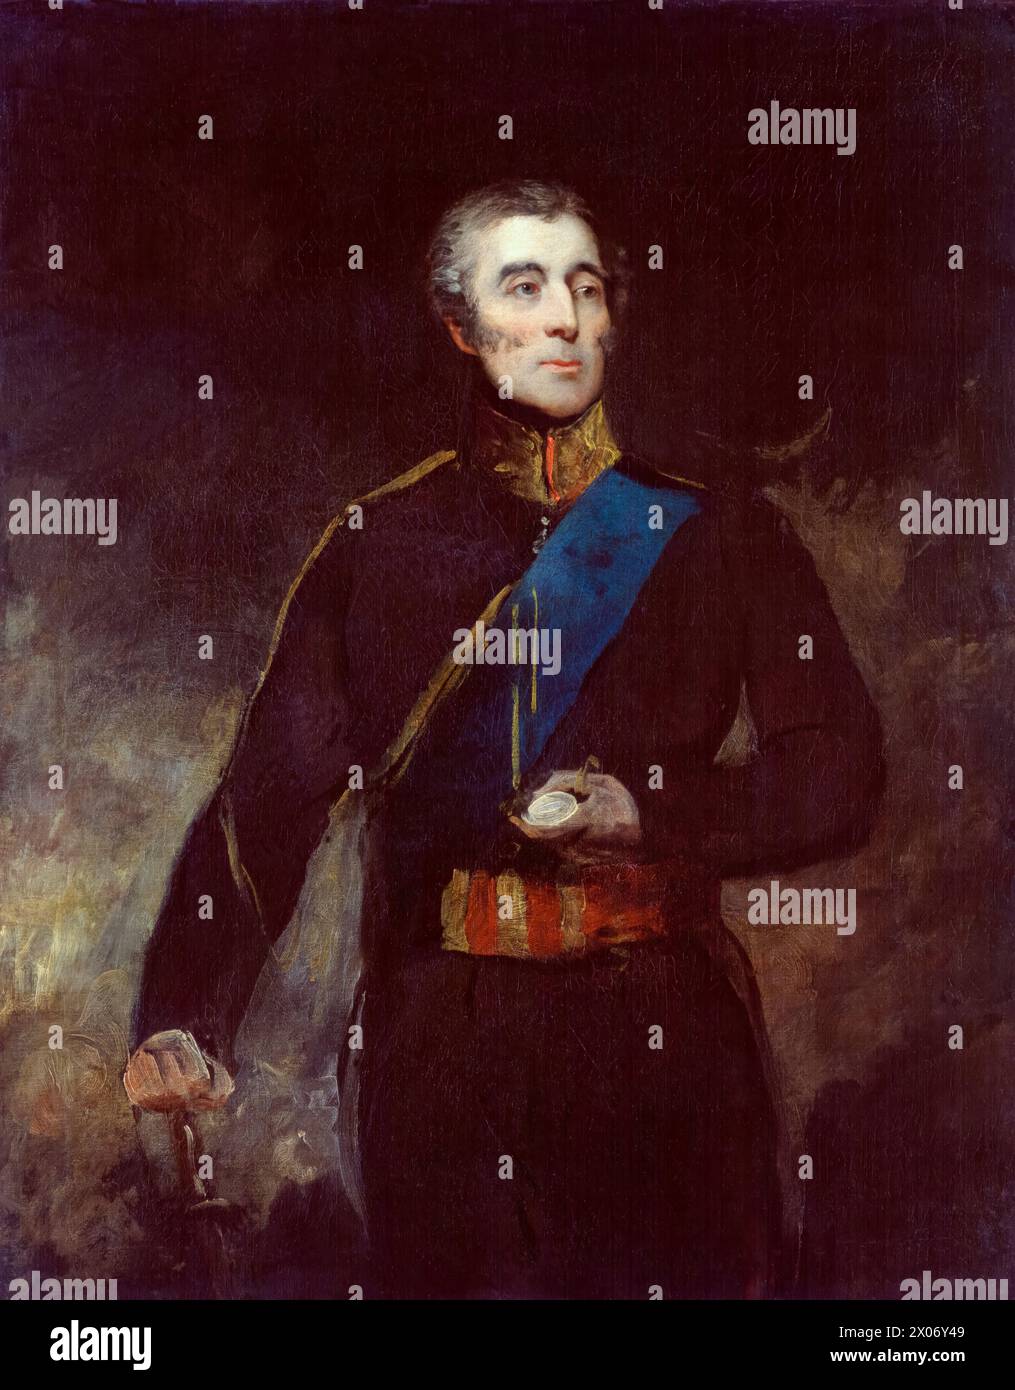 Arthur Wellesley, 1st Duke of Wellington, (1769-1852), portrait painting in oil on canvas by John Jackson, 1830-1831 Stock Photo